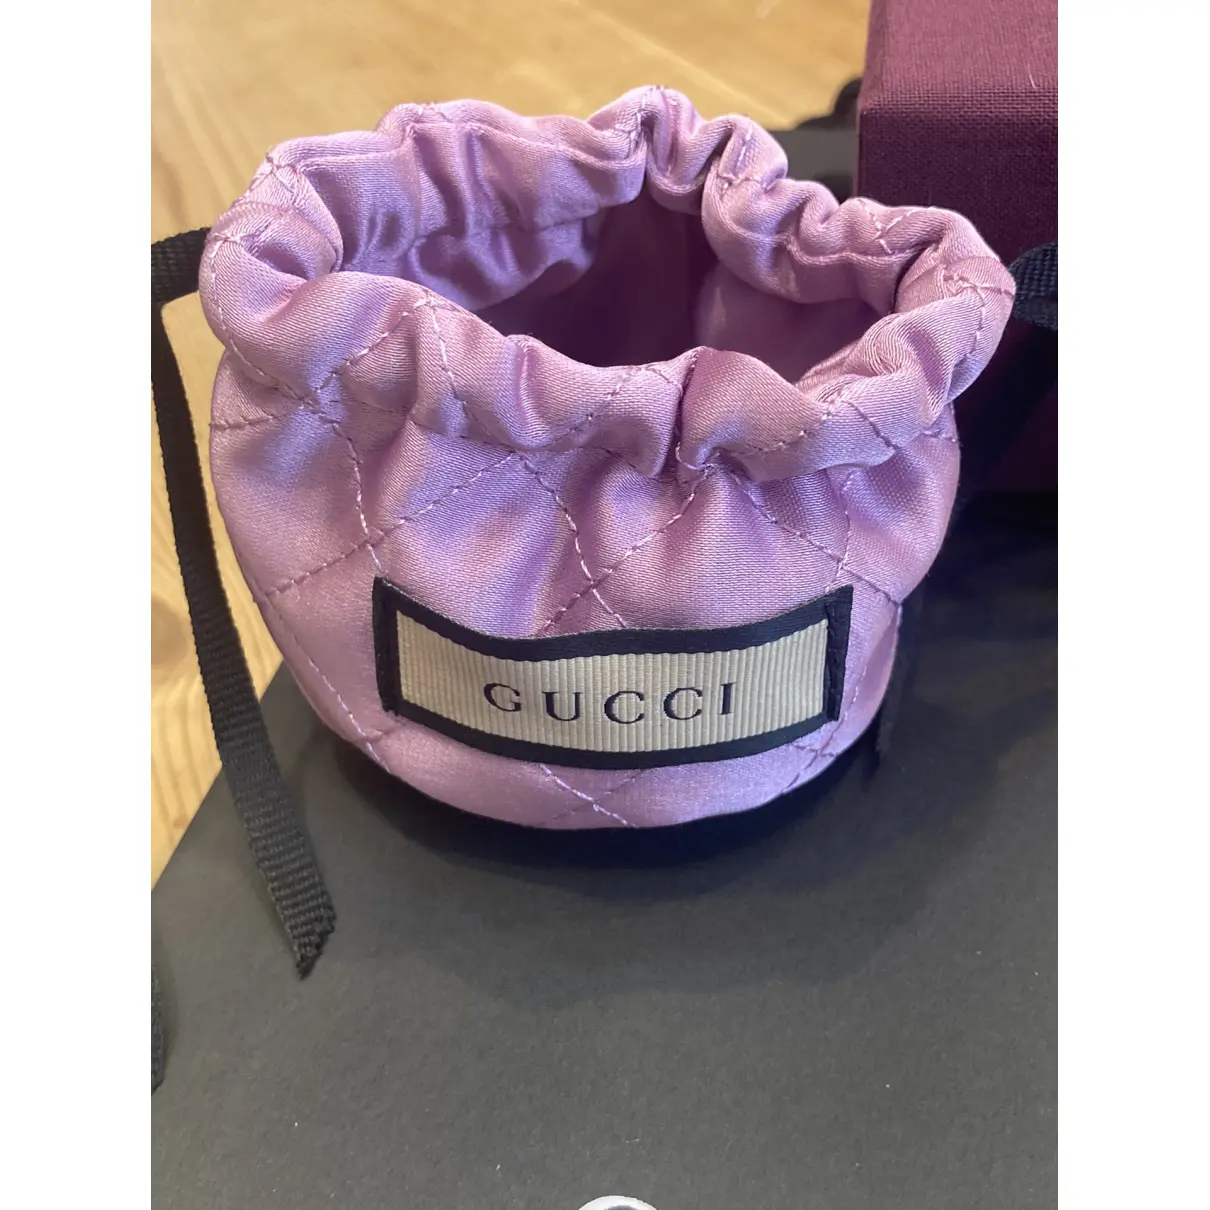 Buy Gucci Silver bracelet online